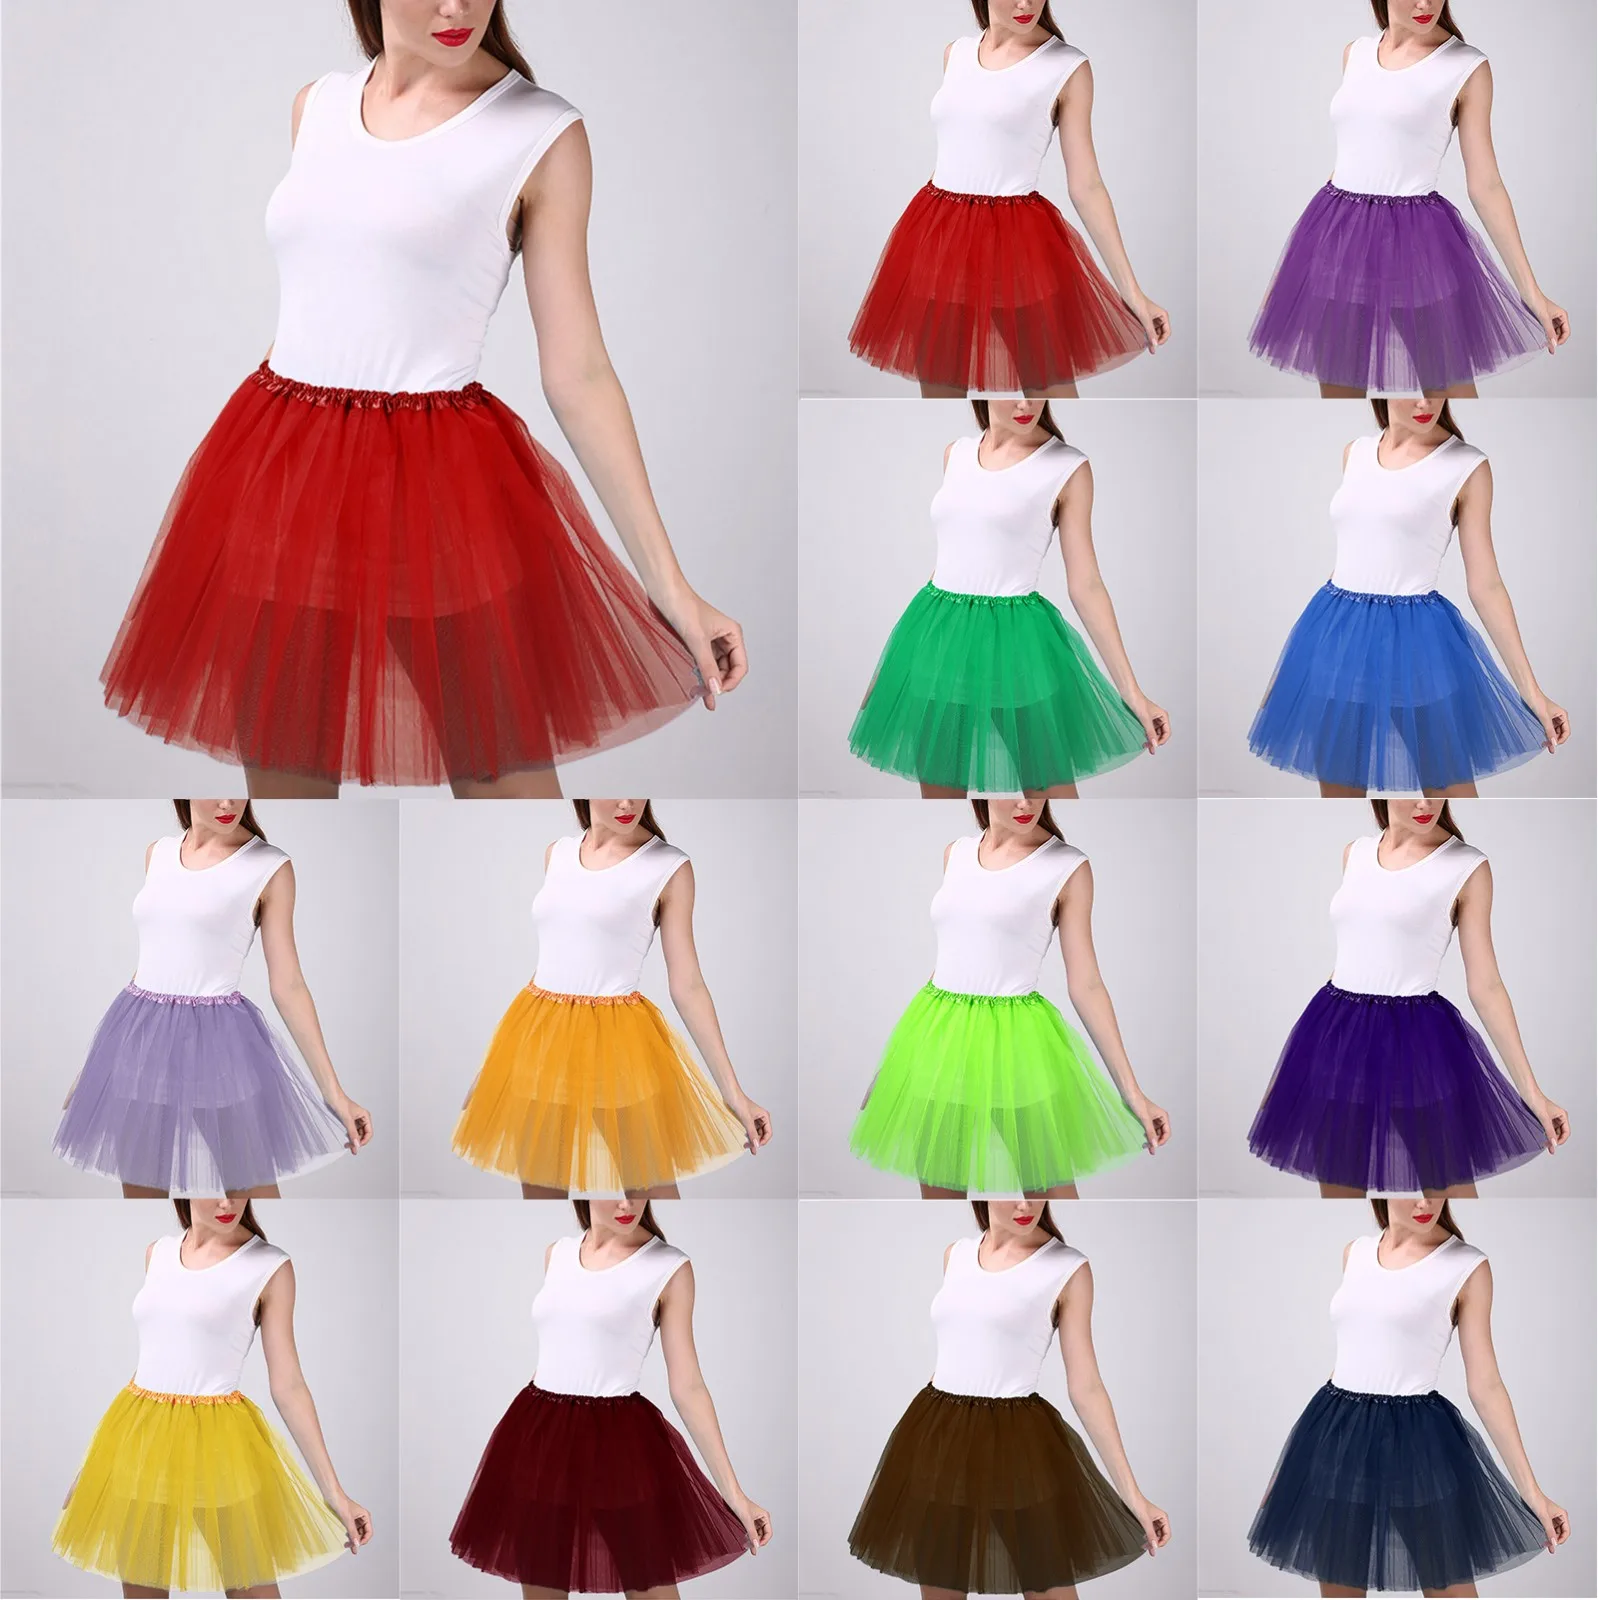 

Womens Layered Tulle Ballet Dance Pettiskirt Fashion Adult Tutu Dancing Skirt Ladies Mini Puffy Skirt Pleated Gauze Short Skirts